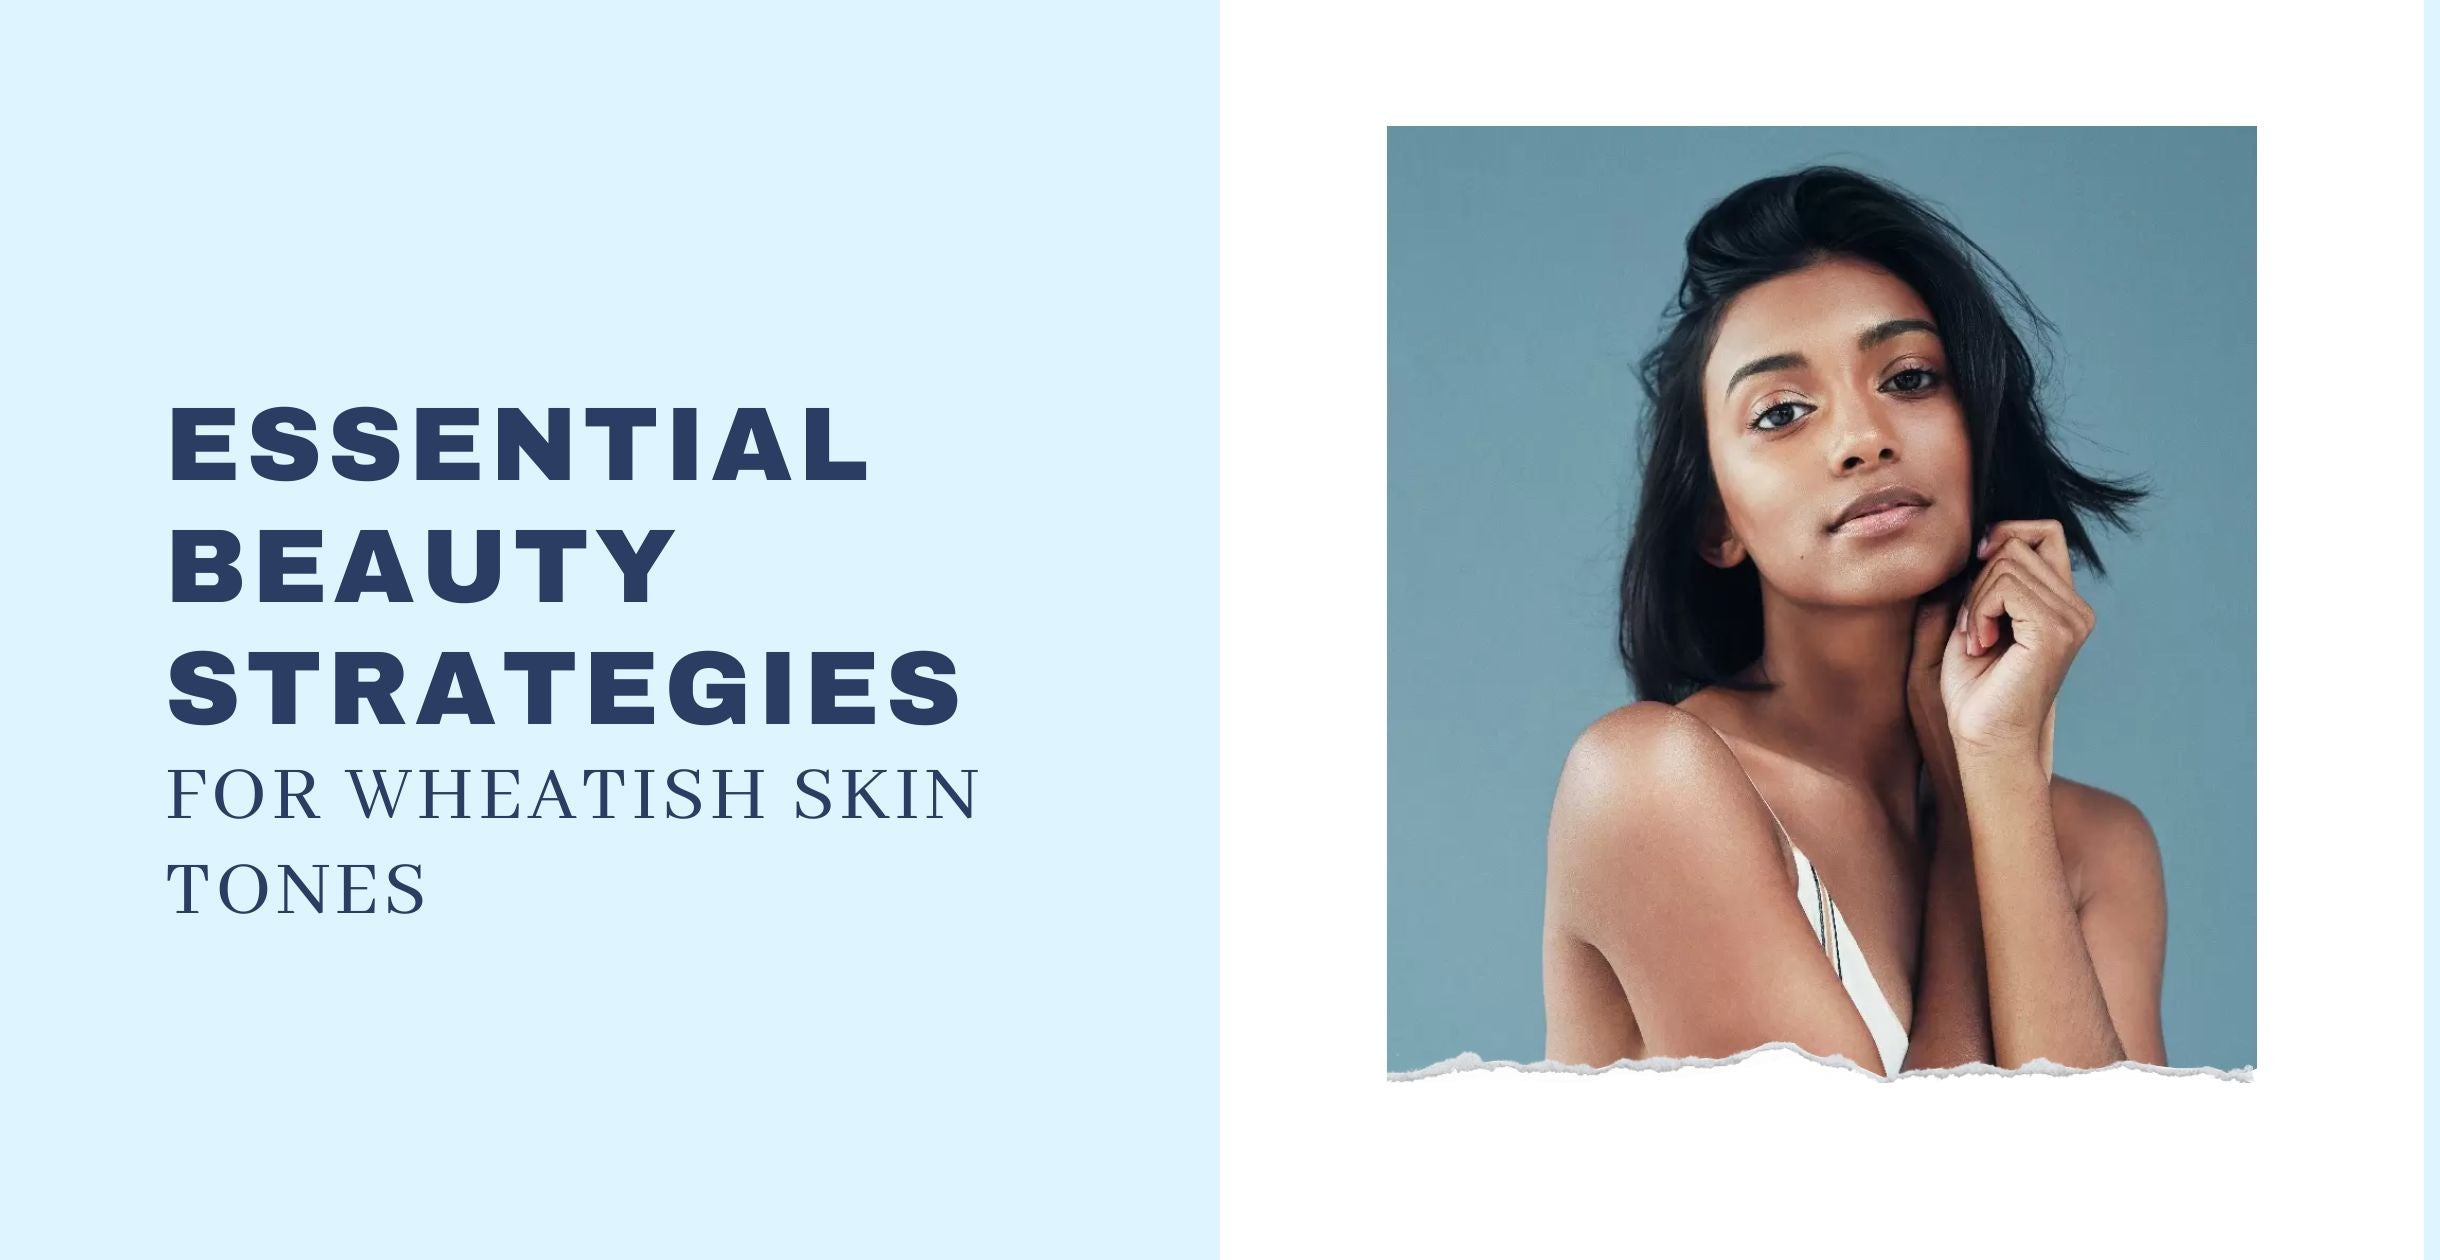 Essential Beauty Strategies for Wheatish Skin Tones